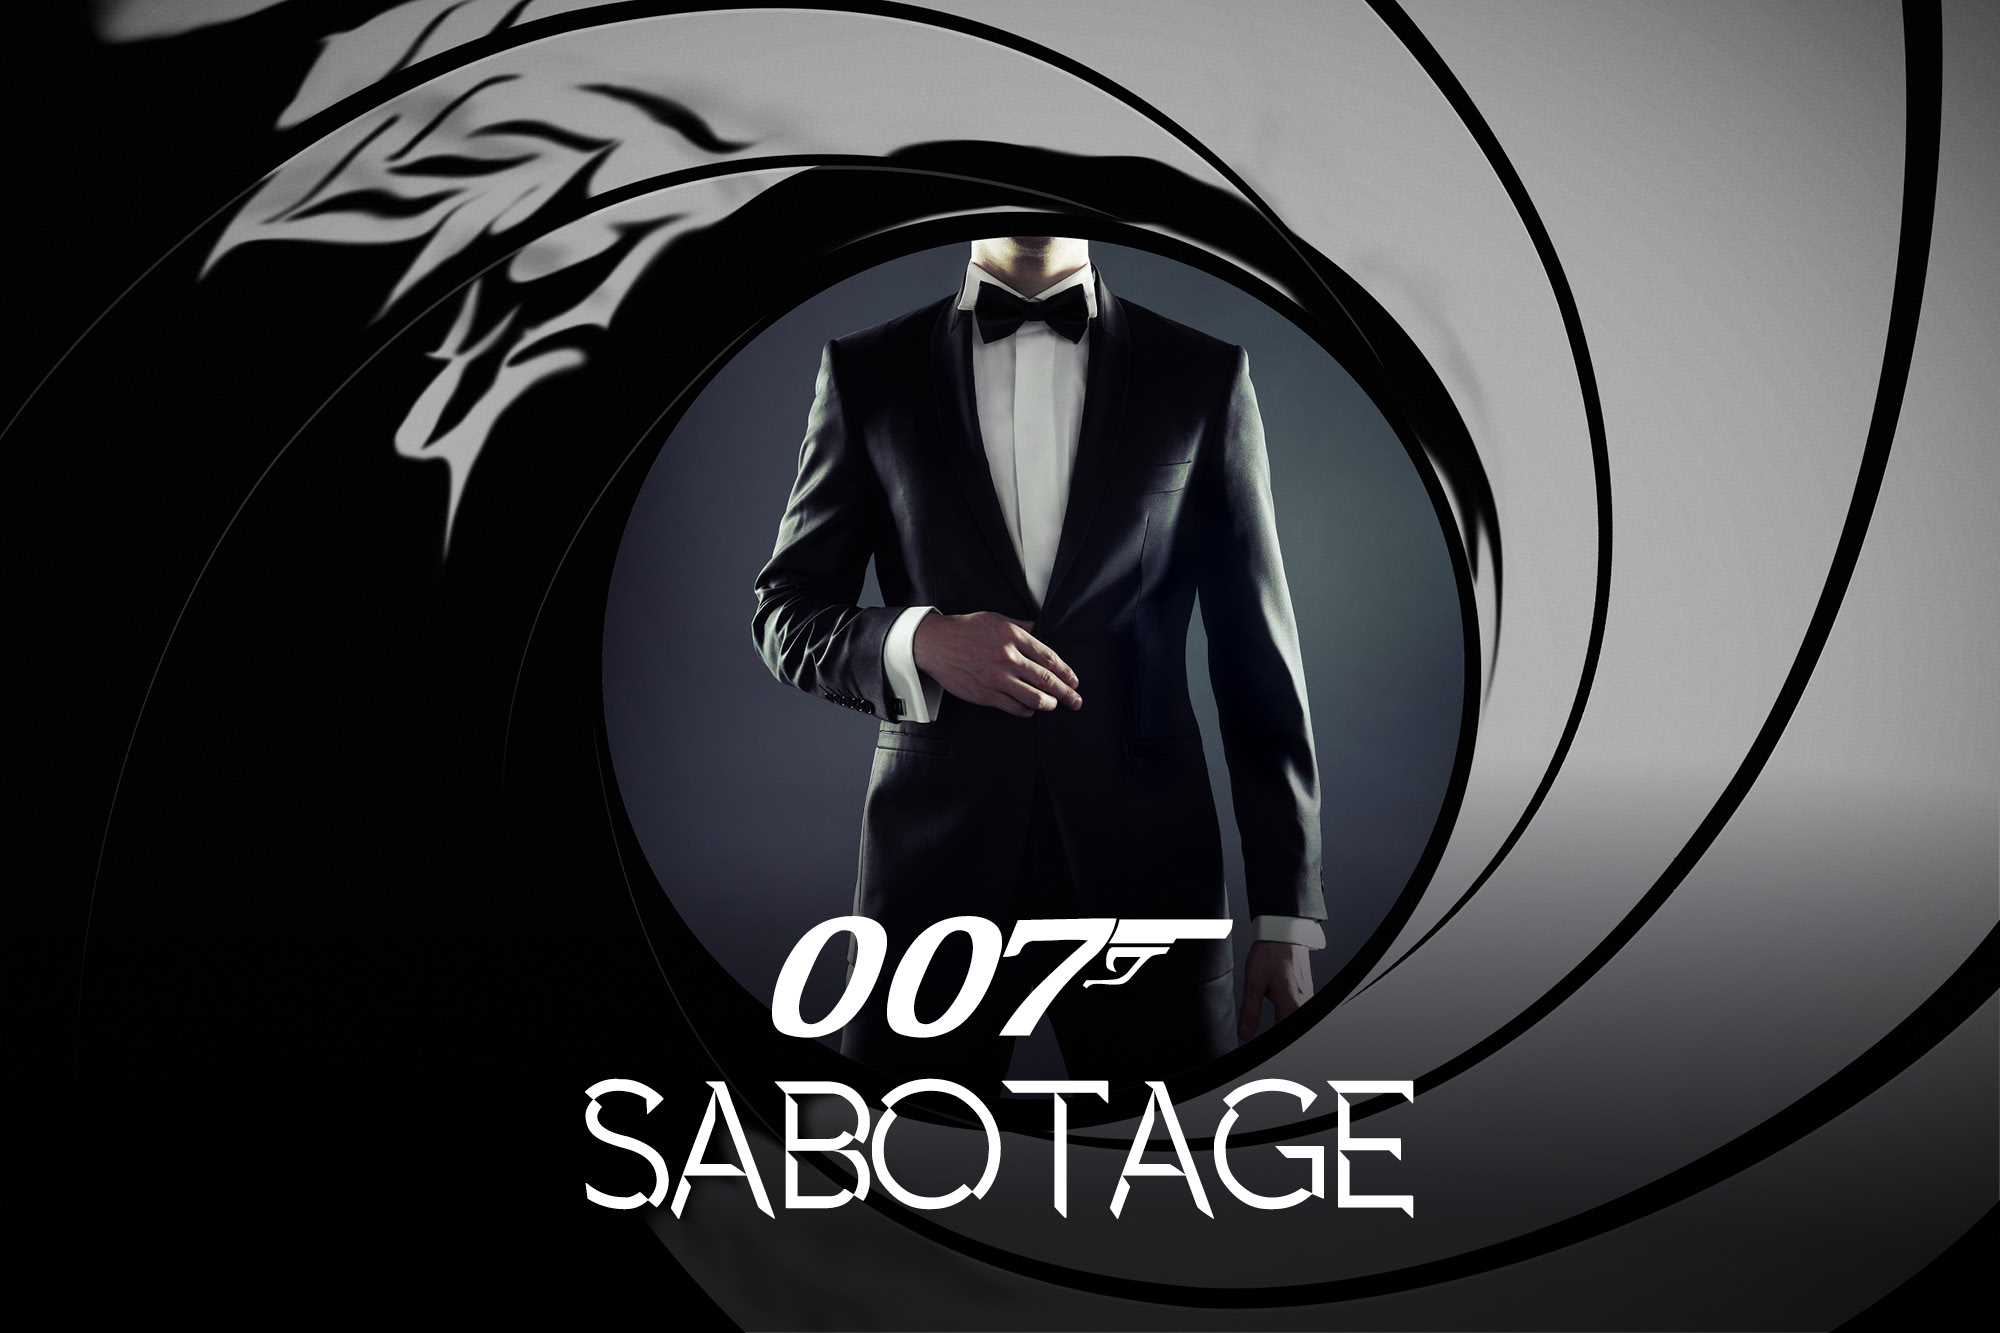 Escape Room 007 – Sabotage